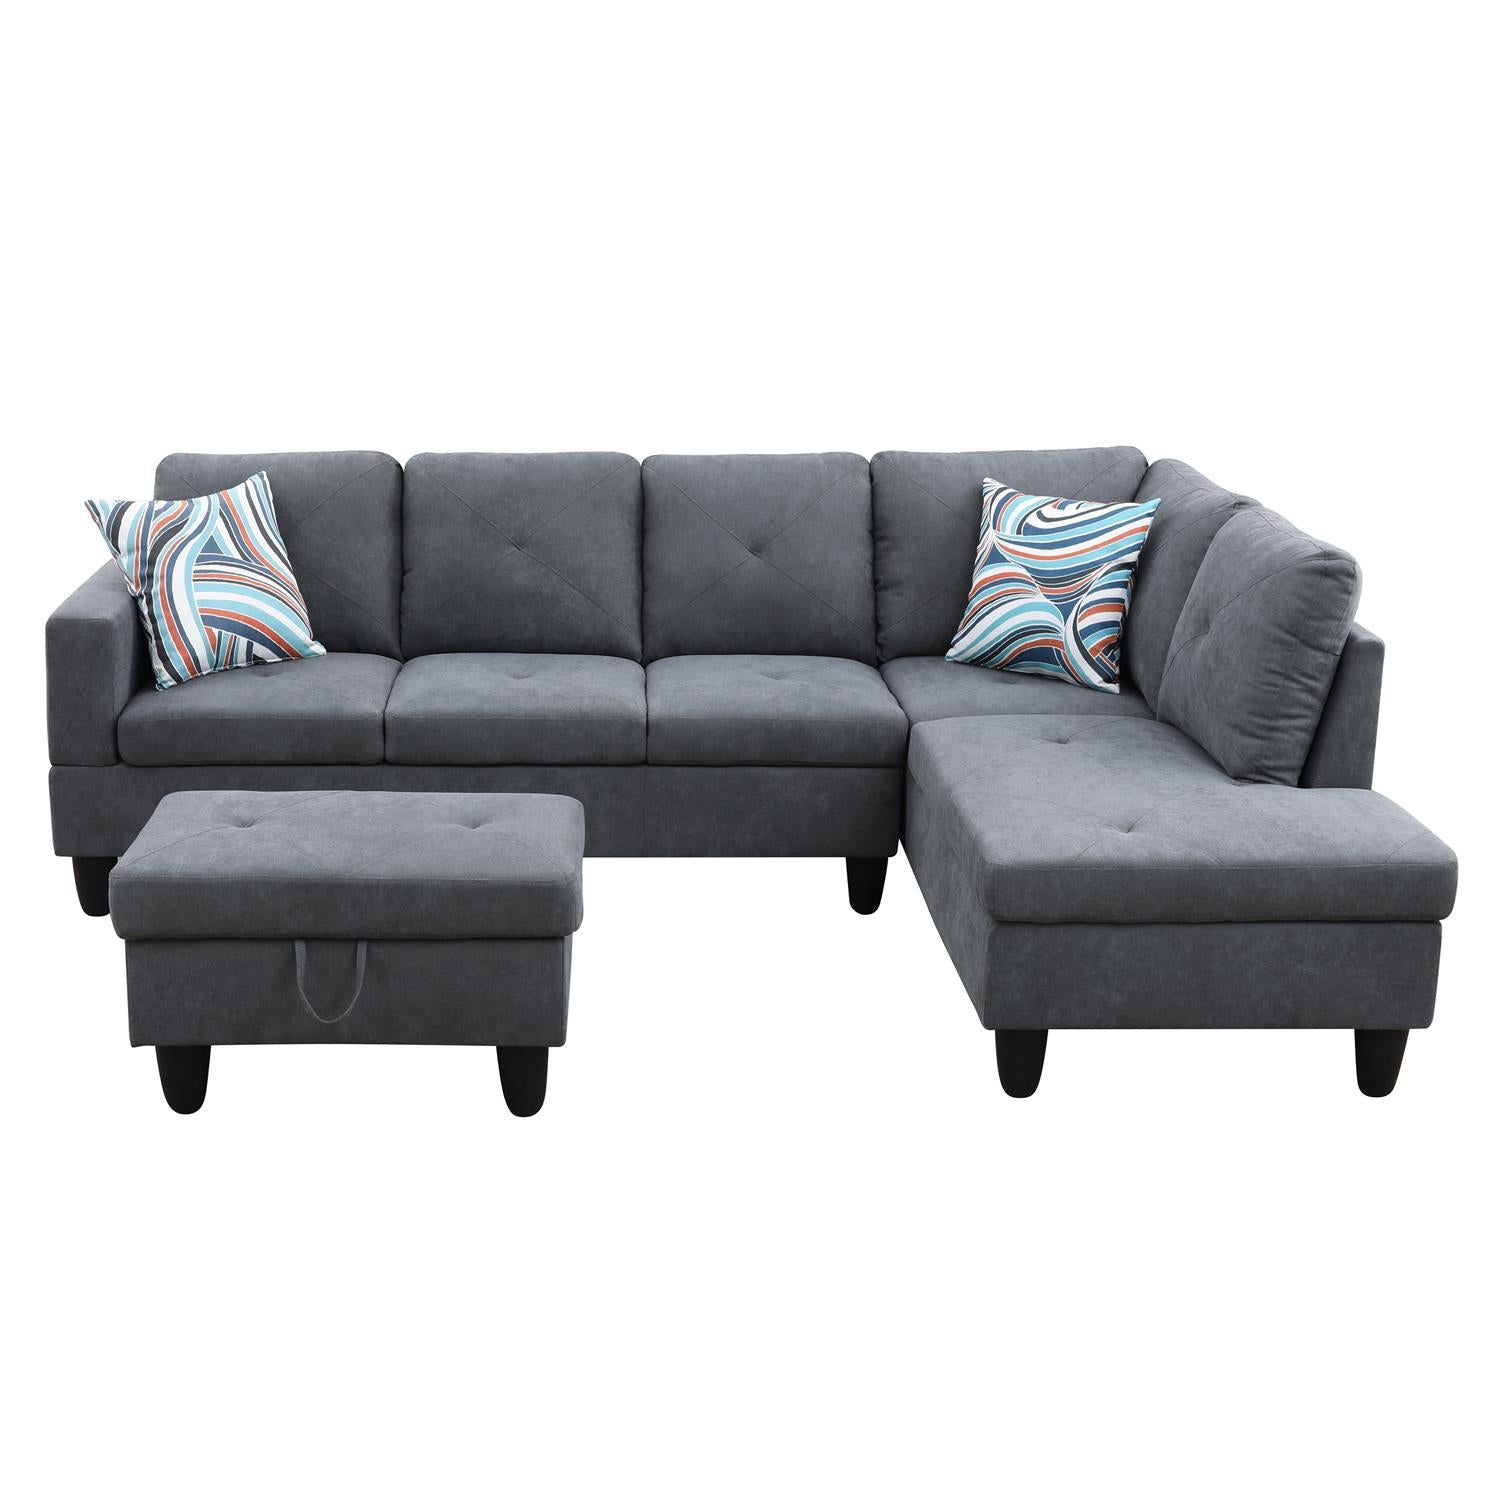 Ainehome Dark Grey L-Shaped Microfiber Sofa Set